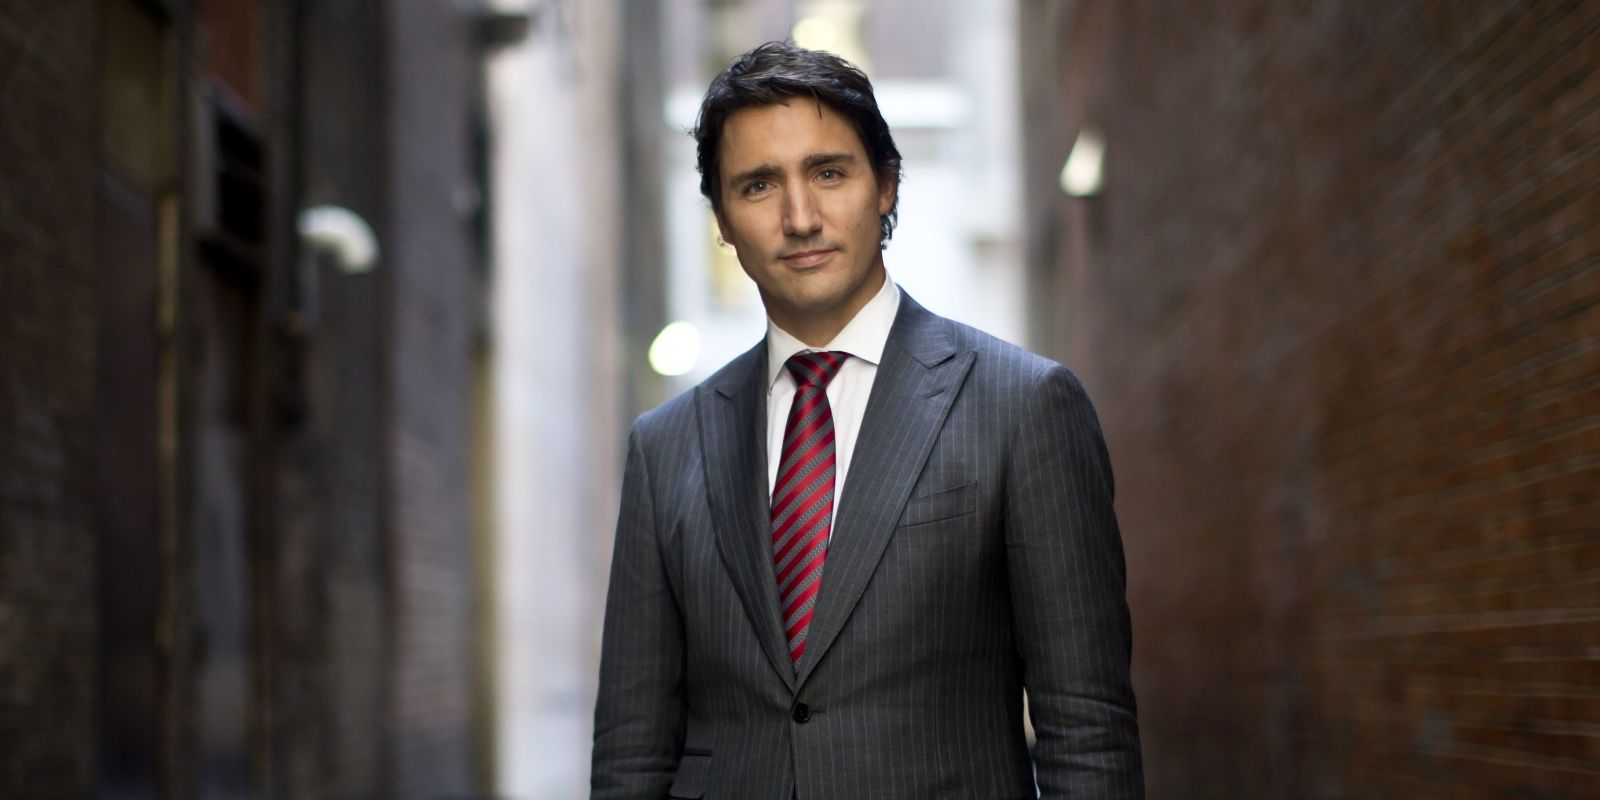 Pesona Justin Trudeau, PM Kanada  Berdarah Minang